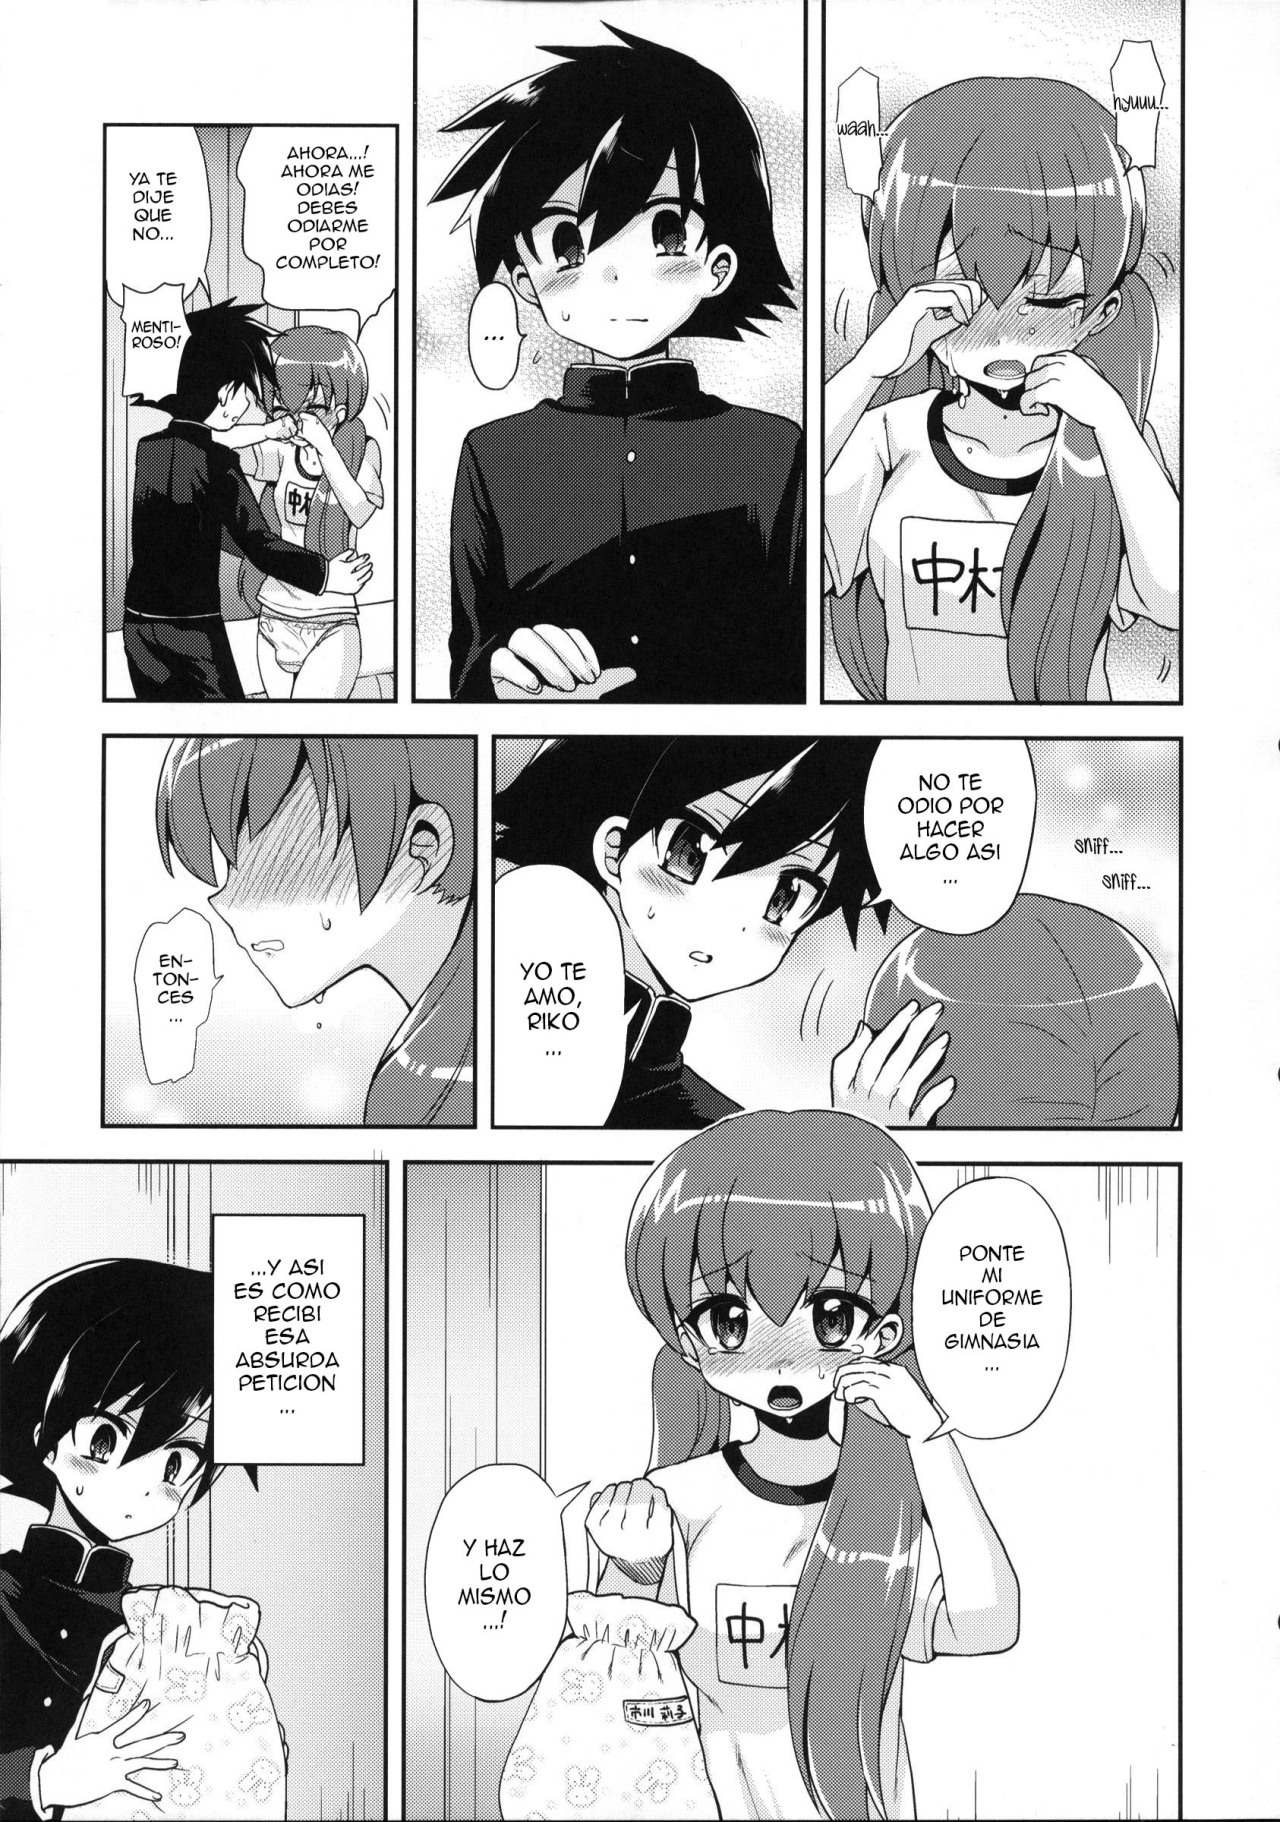 Mi Novia Futanari y El Interruptor Obsceno [Manga][Futanari]